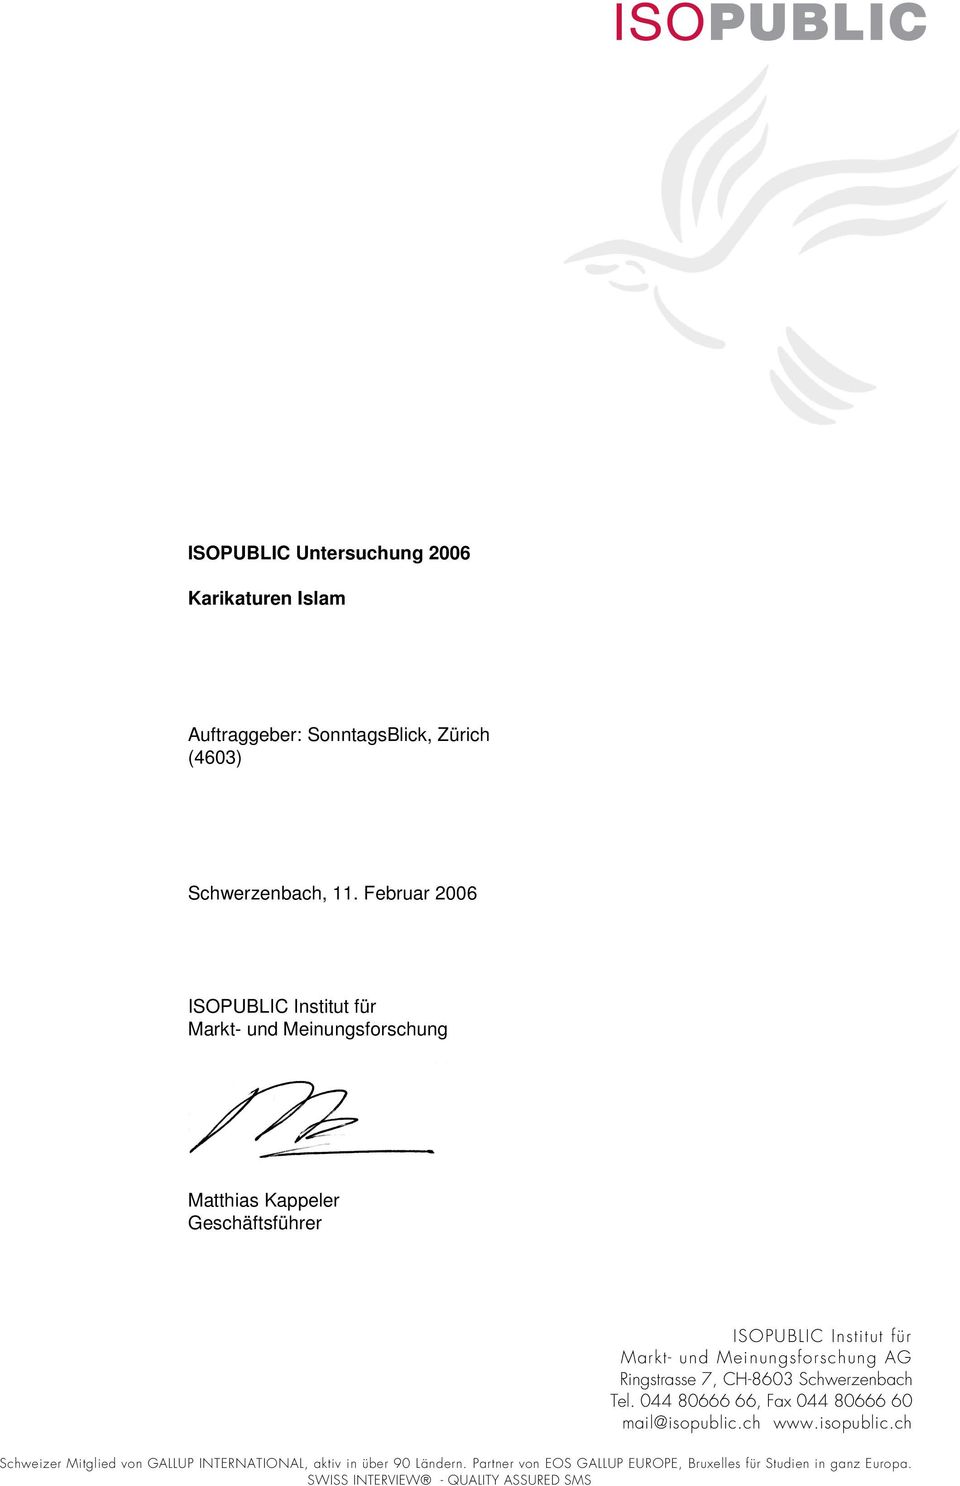 Meinungsforschung AG Ringstrasse 7, CH-8603 Schwerzenbach Tel. 044 80666 66, Fax 044 80666 60 mail@isopublic.